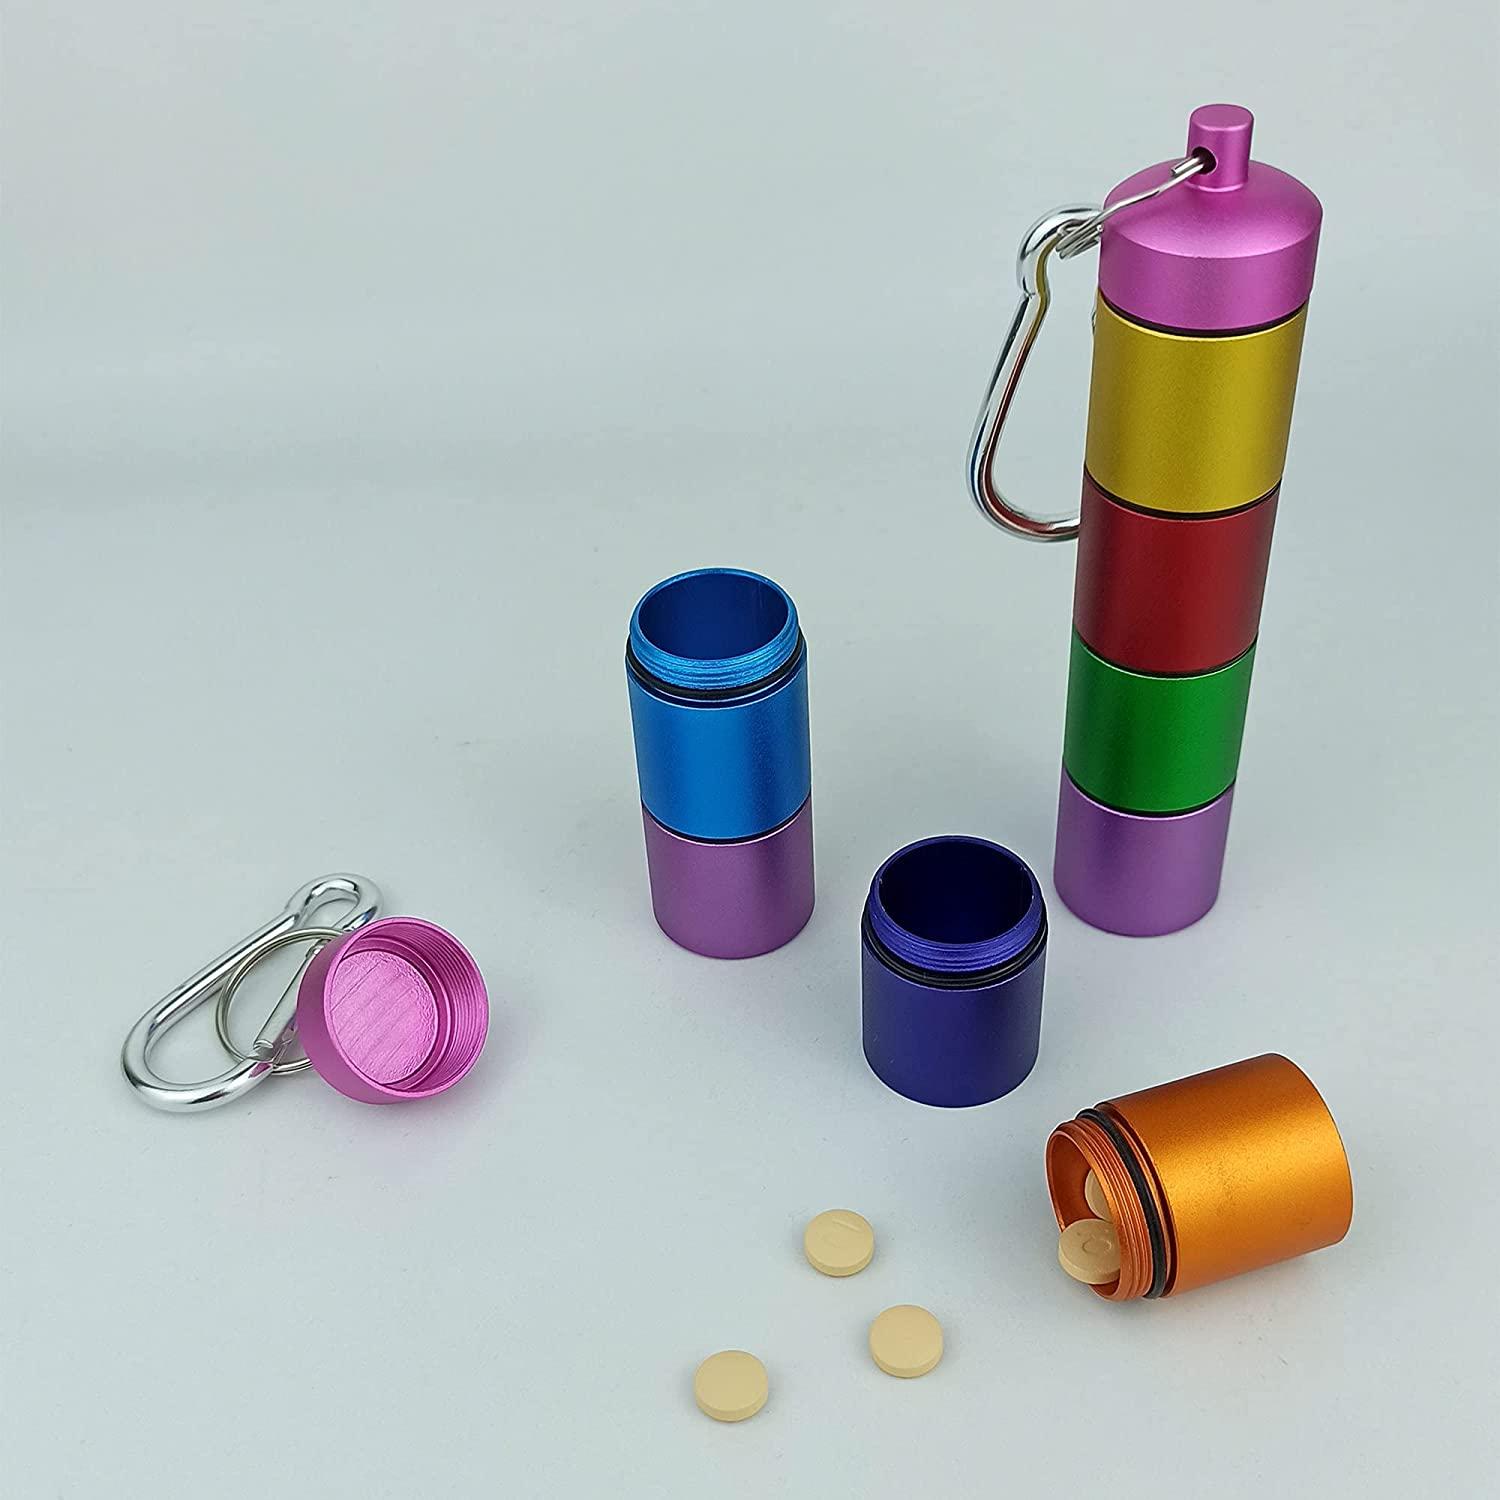 1*Mini Waterproof Metal Medicine Pill Box Case Bottle Holder Container-Keychain